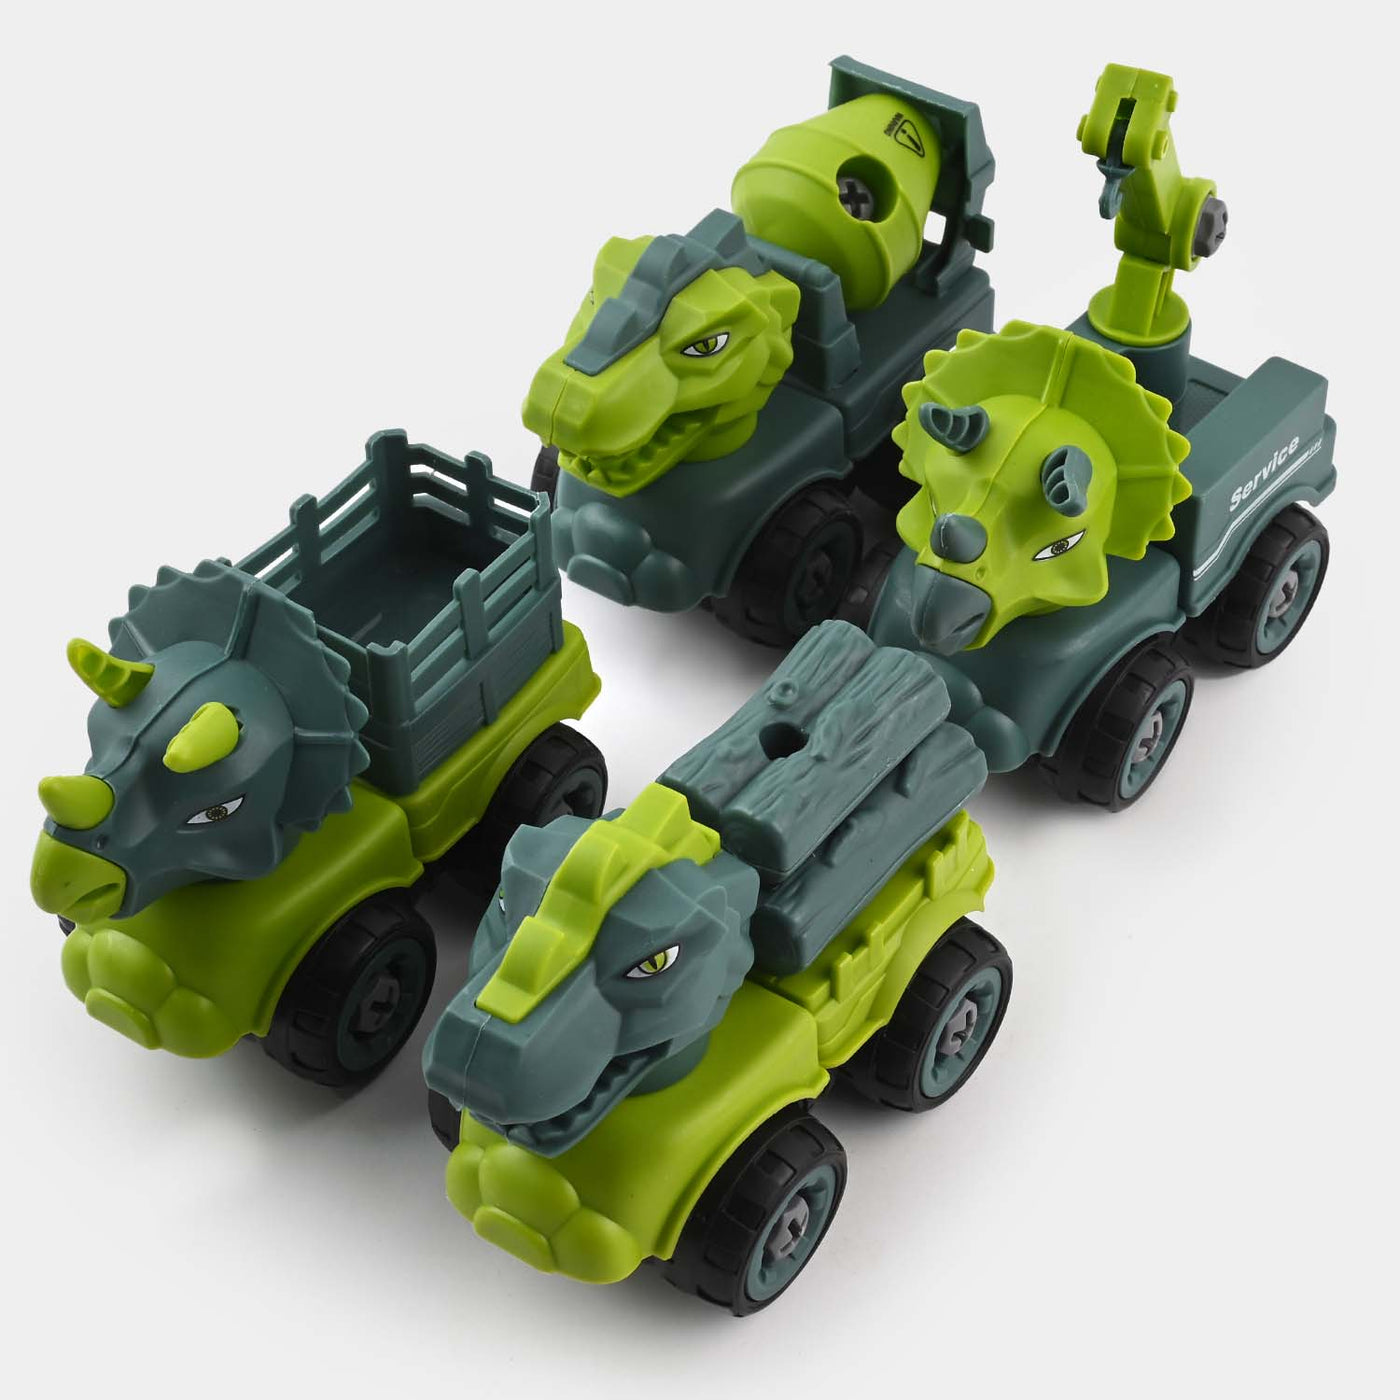 Dinosaur Construction Vehicle For Kids